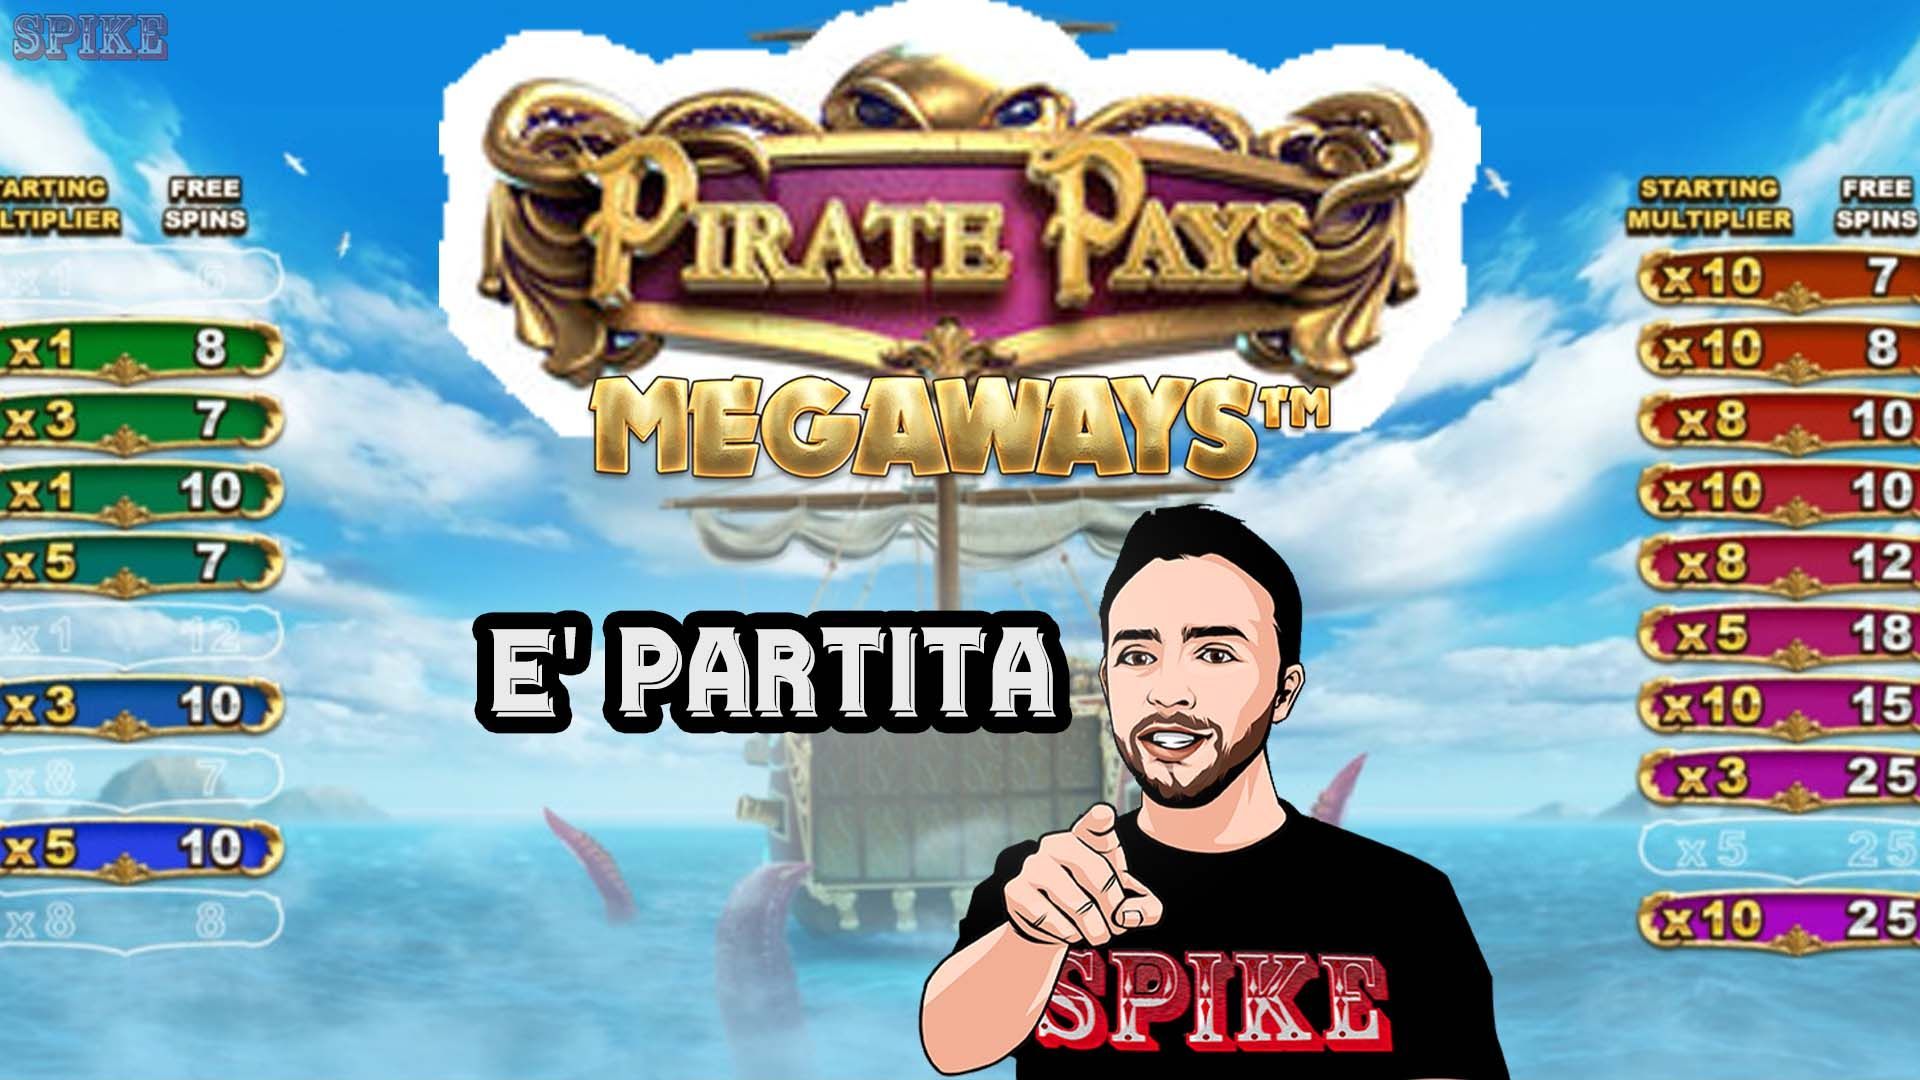 Slot Pirate Pays Megaways